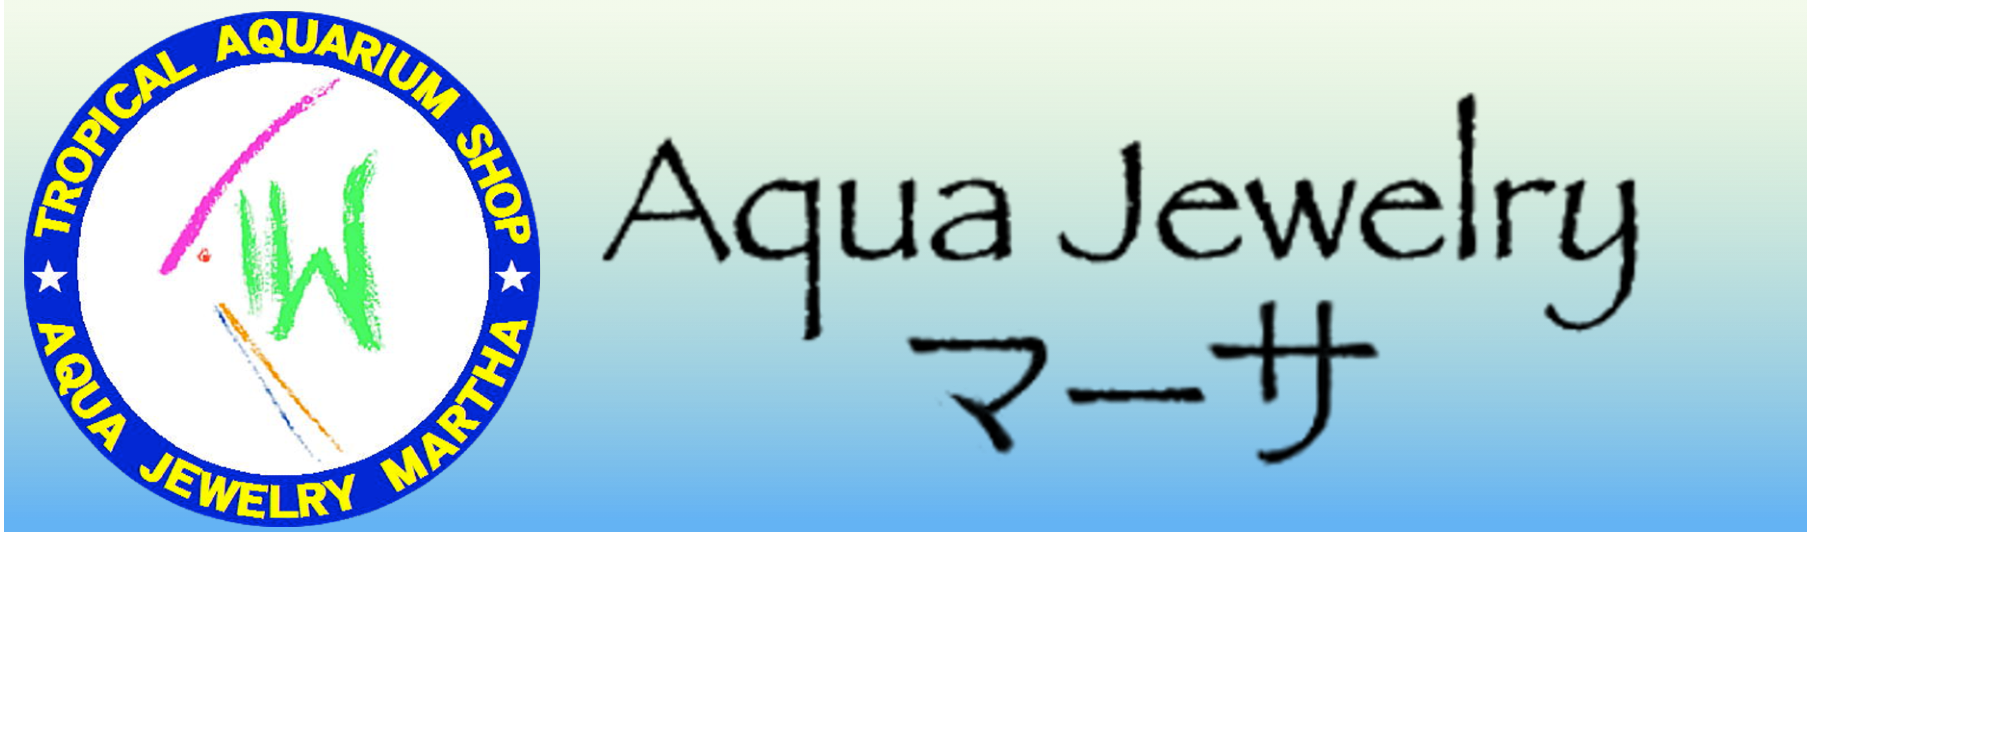 Aqua jewelry マーサ